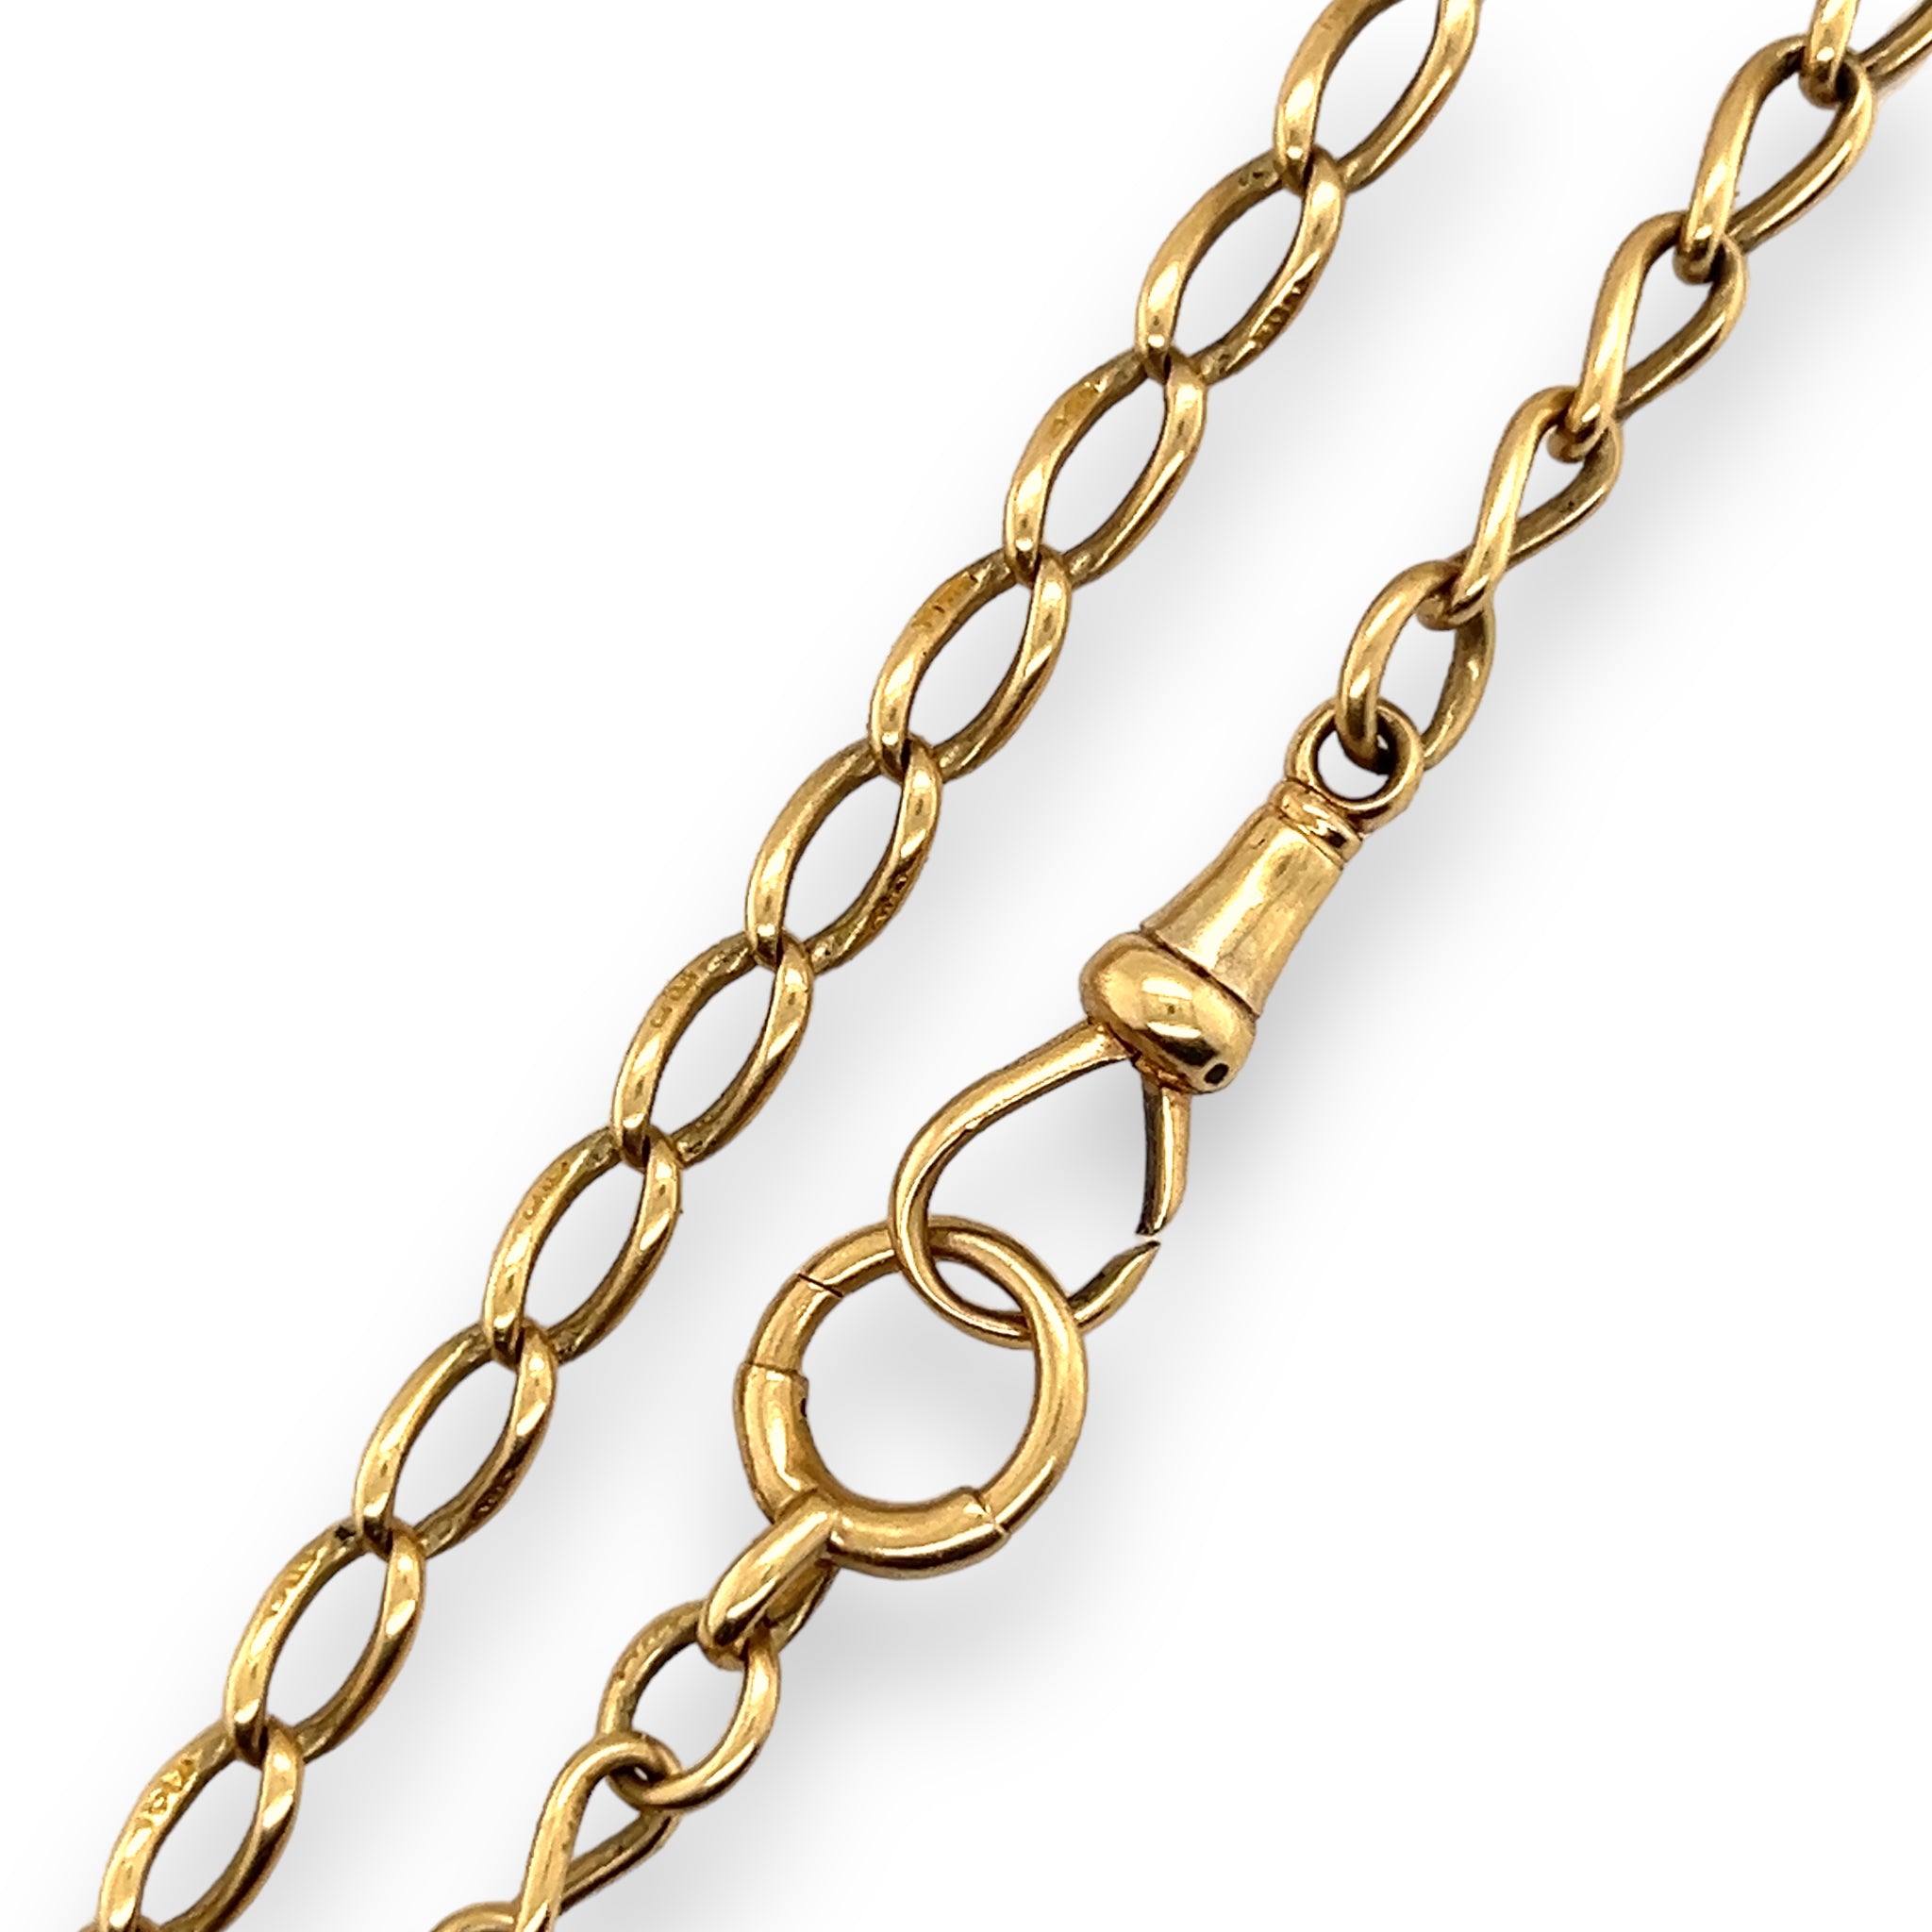 NG 09- 18ct Gold Snake Chain - Netstore Jewellery Australia